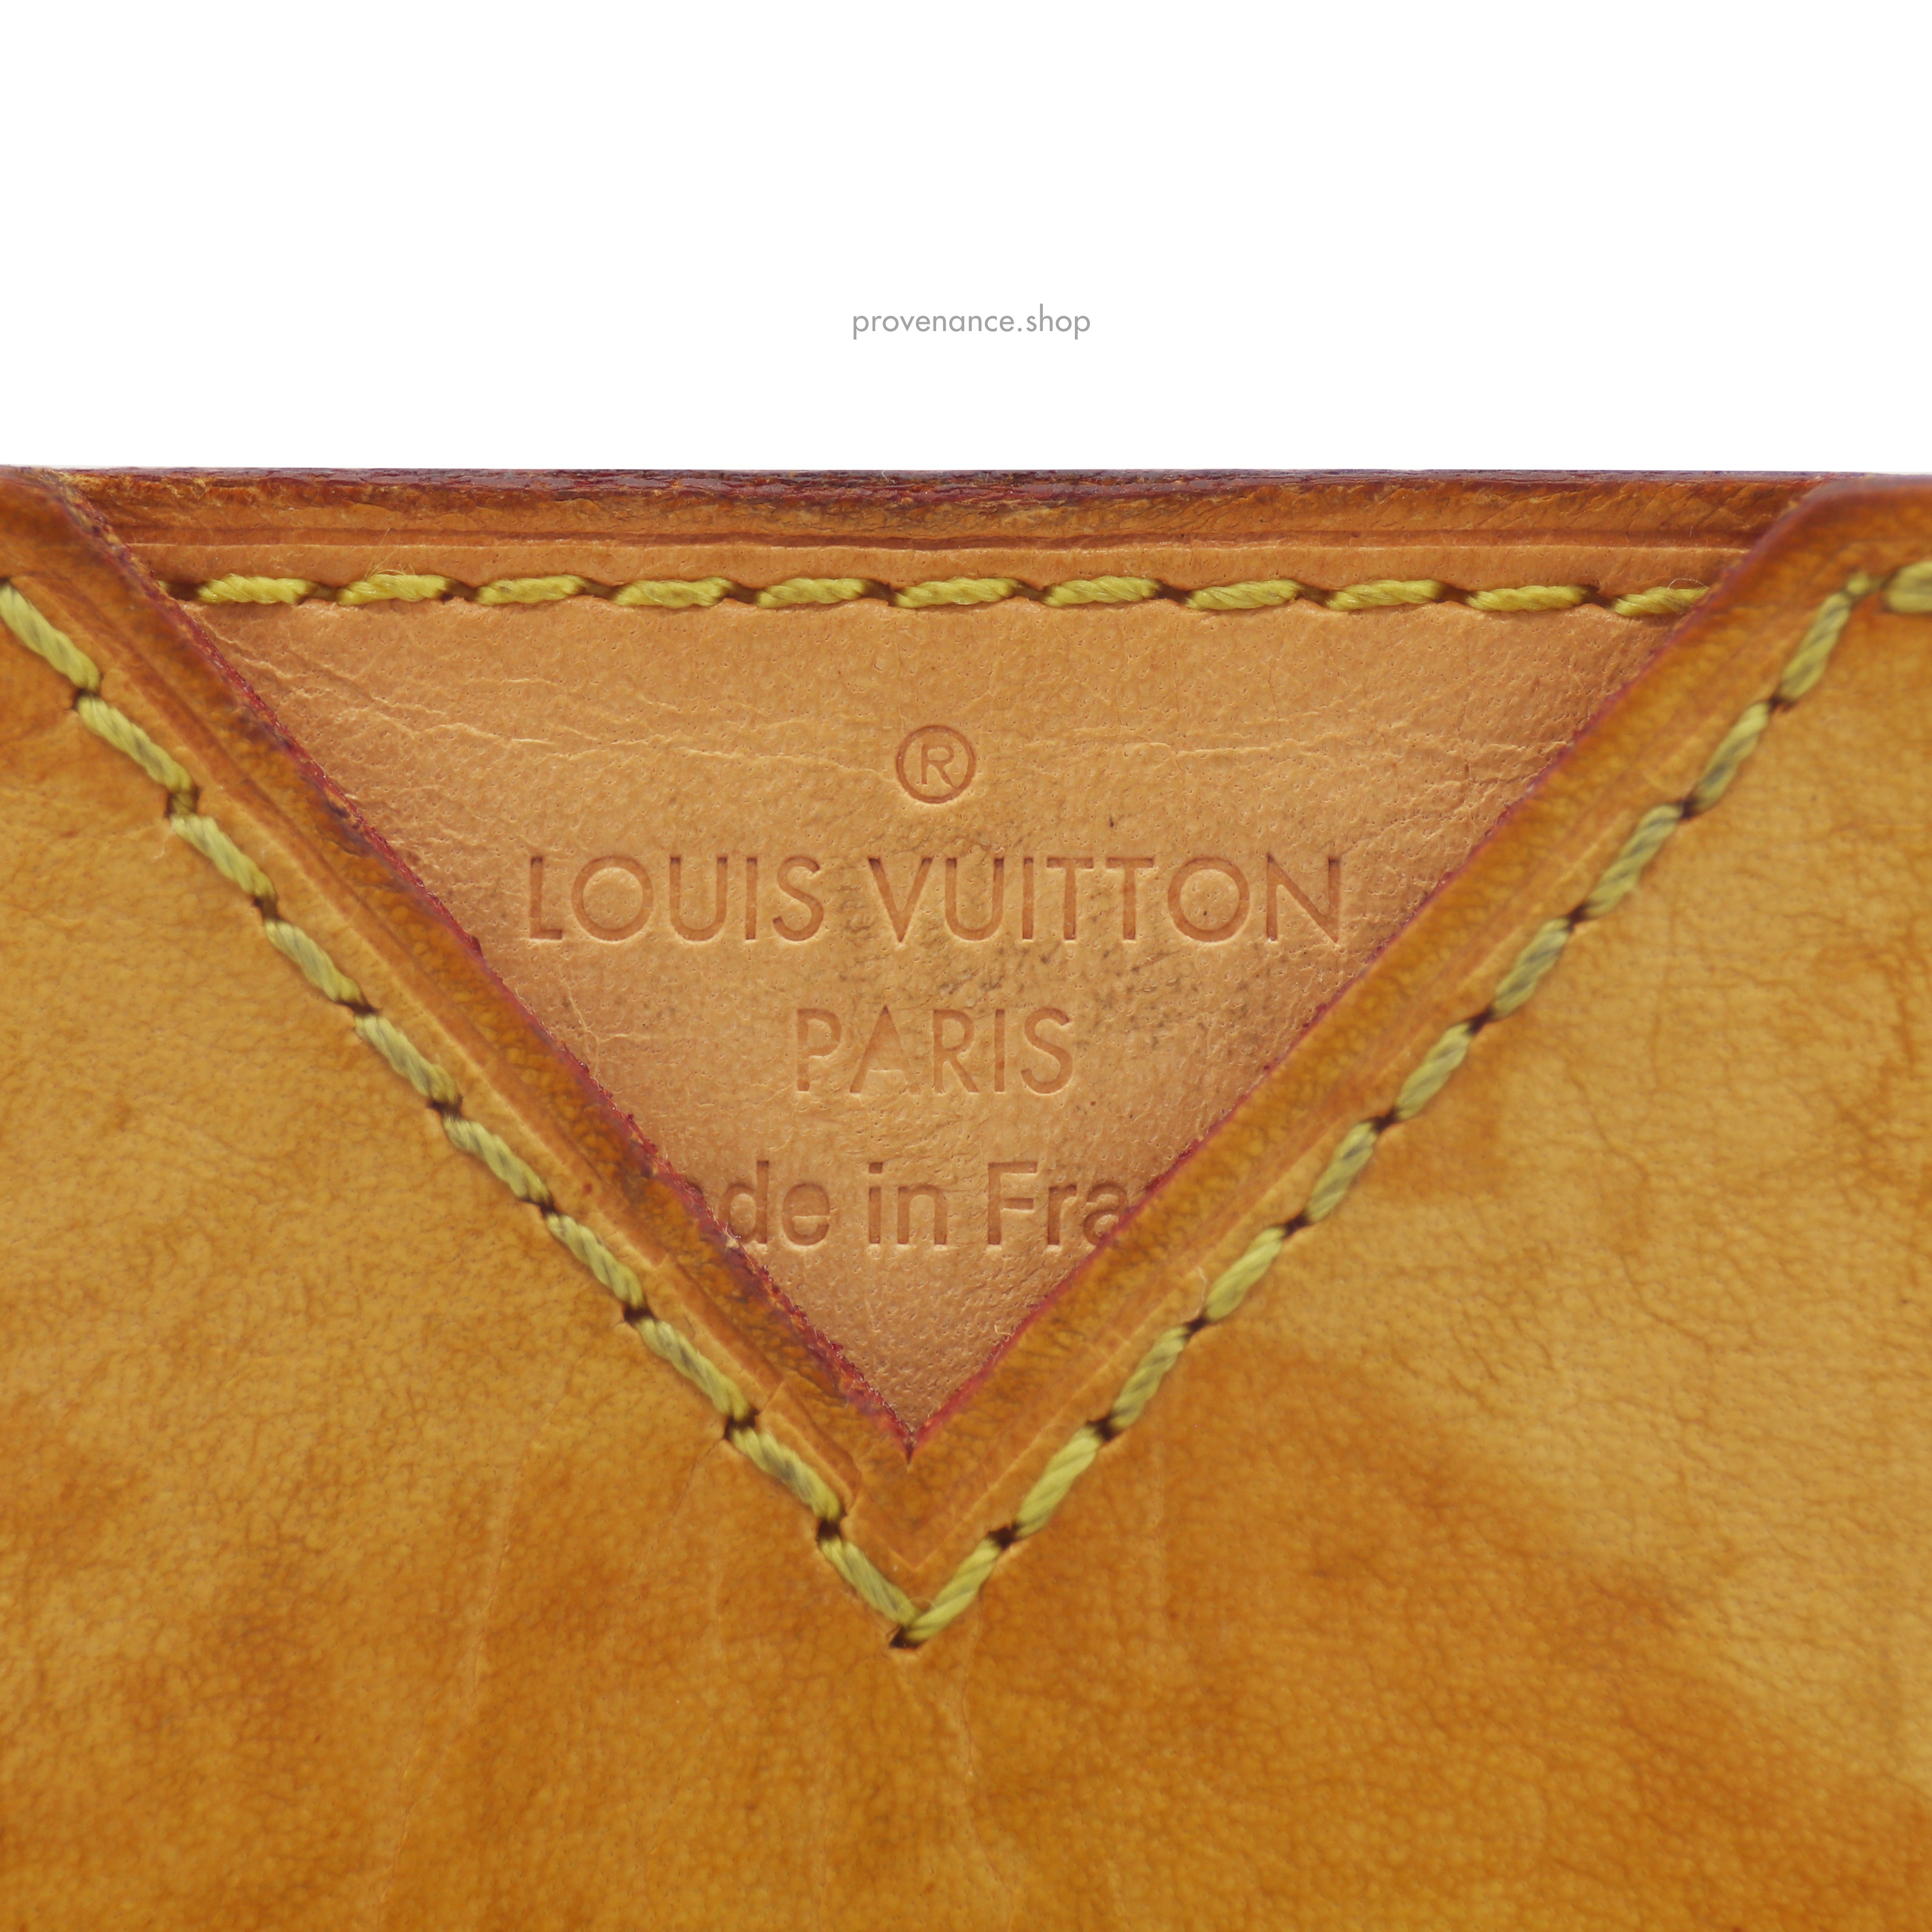 Louis Vuitton Orange Nomade Leather Marco Wallet Louis Vuitton